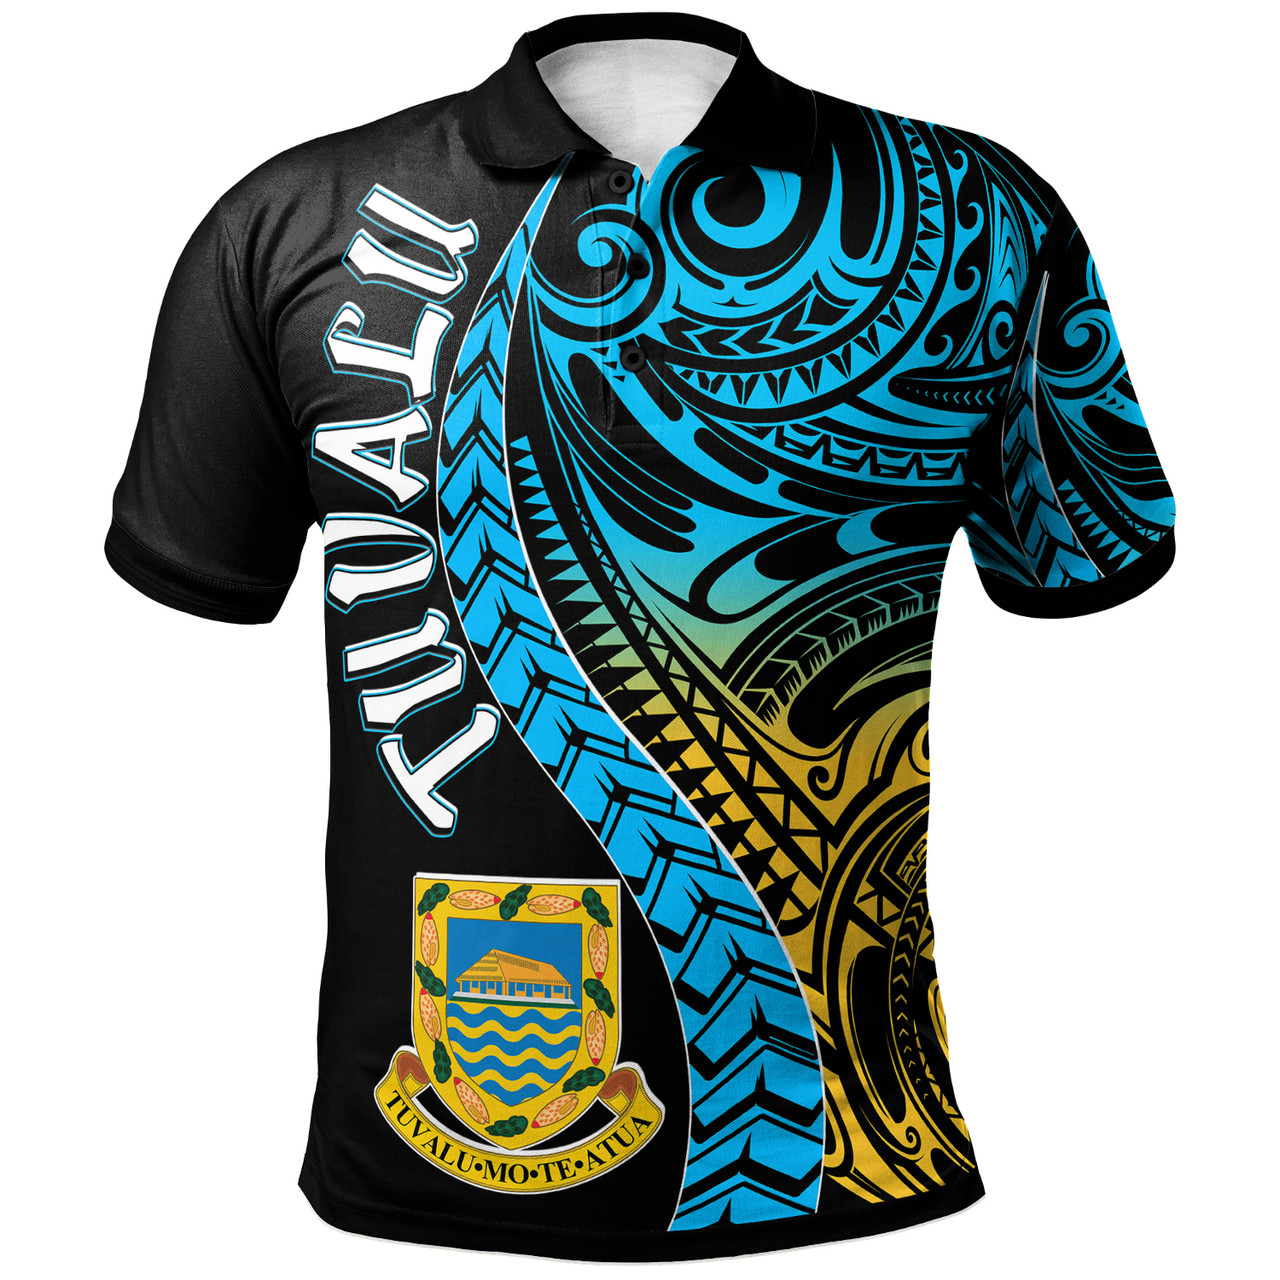 Tuvalu Polynesian Polo Shirt - Custom Tuvalu Day with Polynesian Pattern Polo Shirt